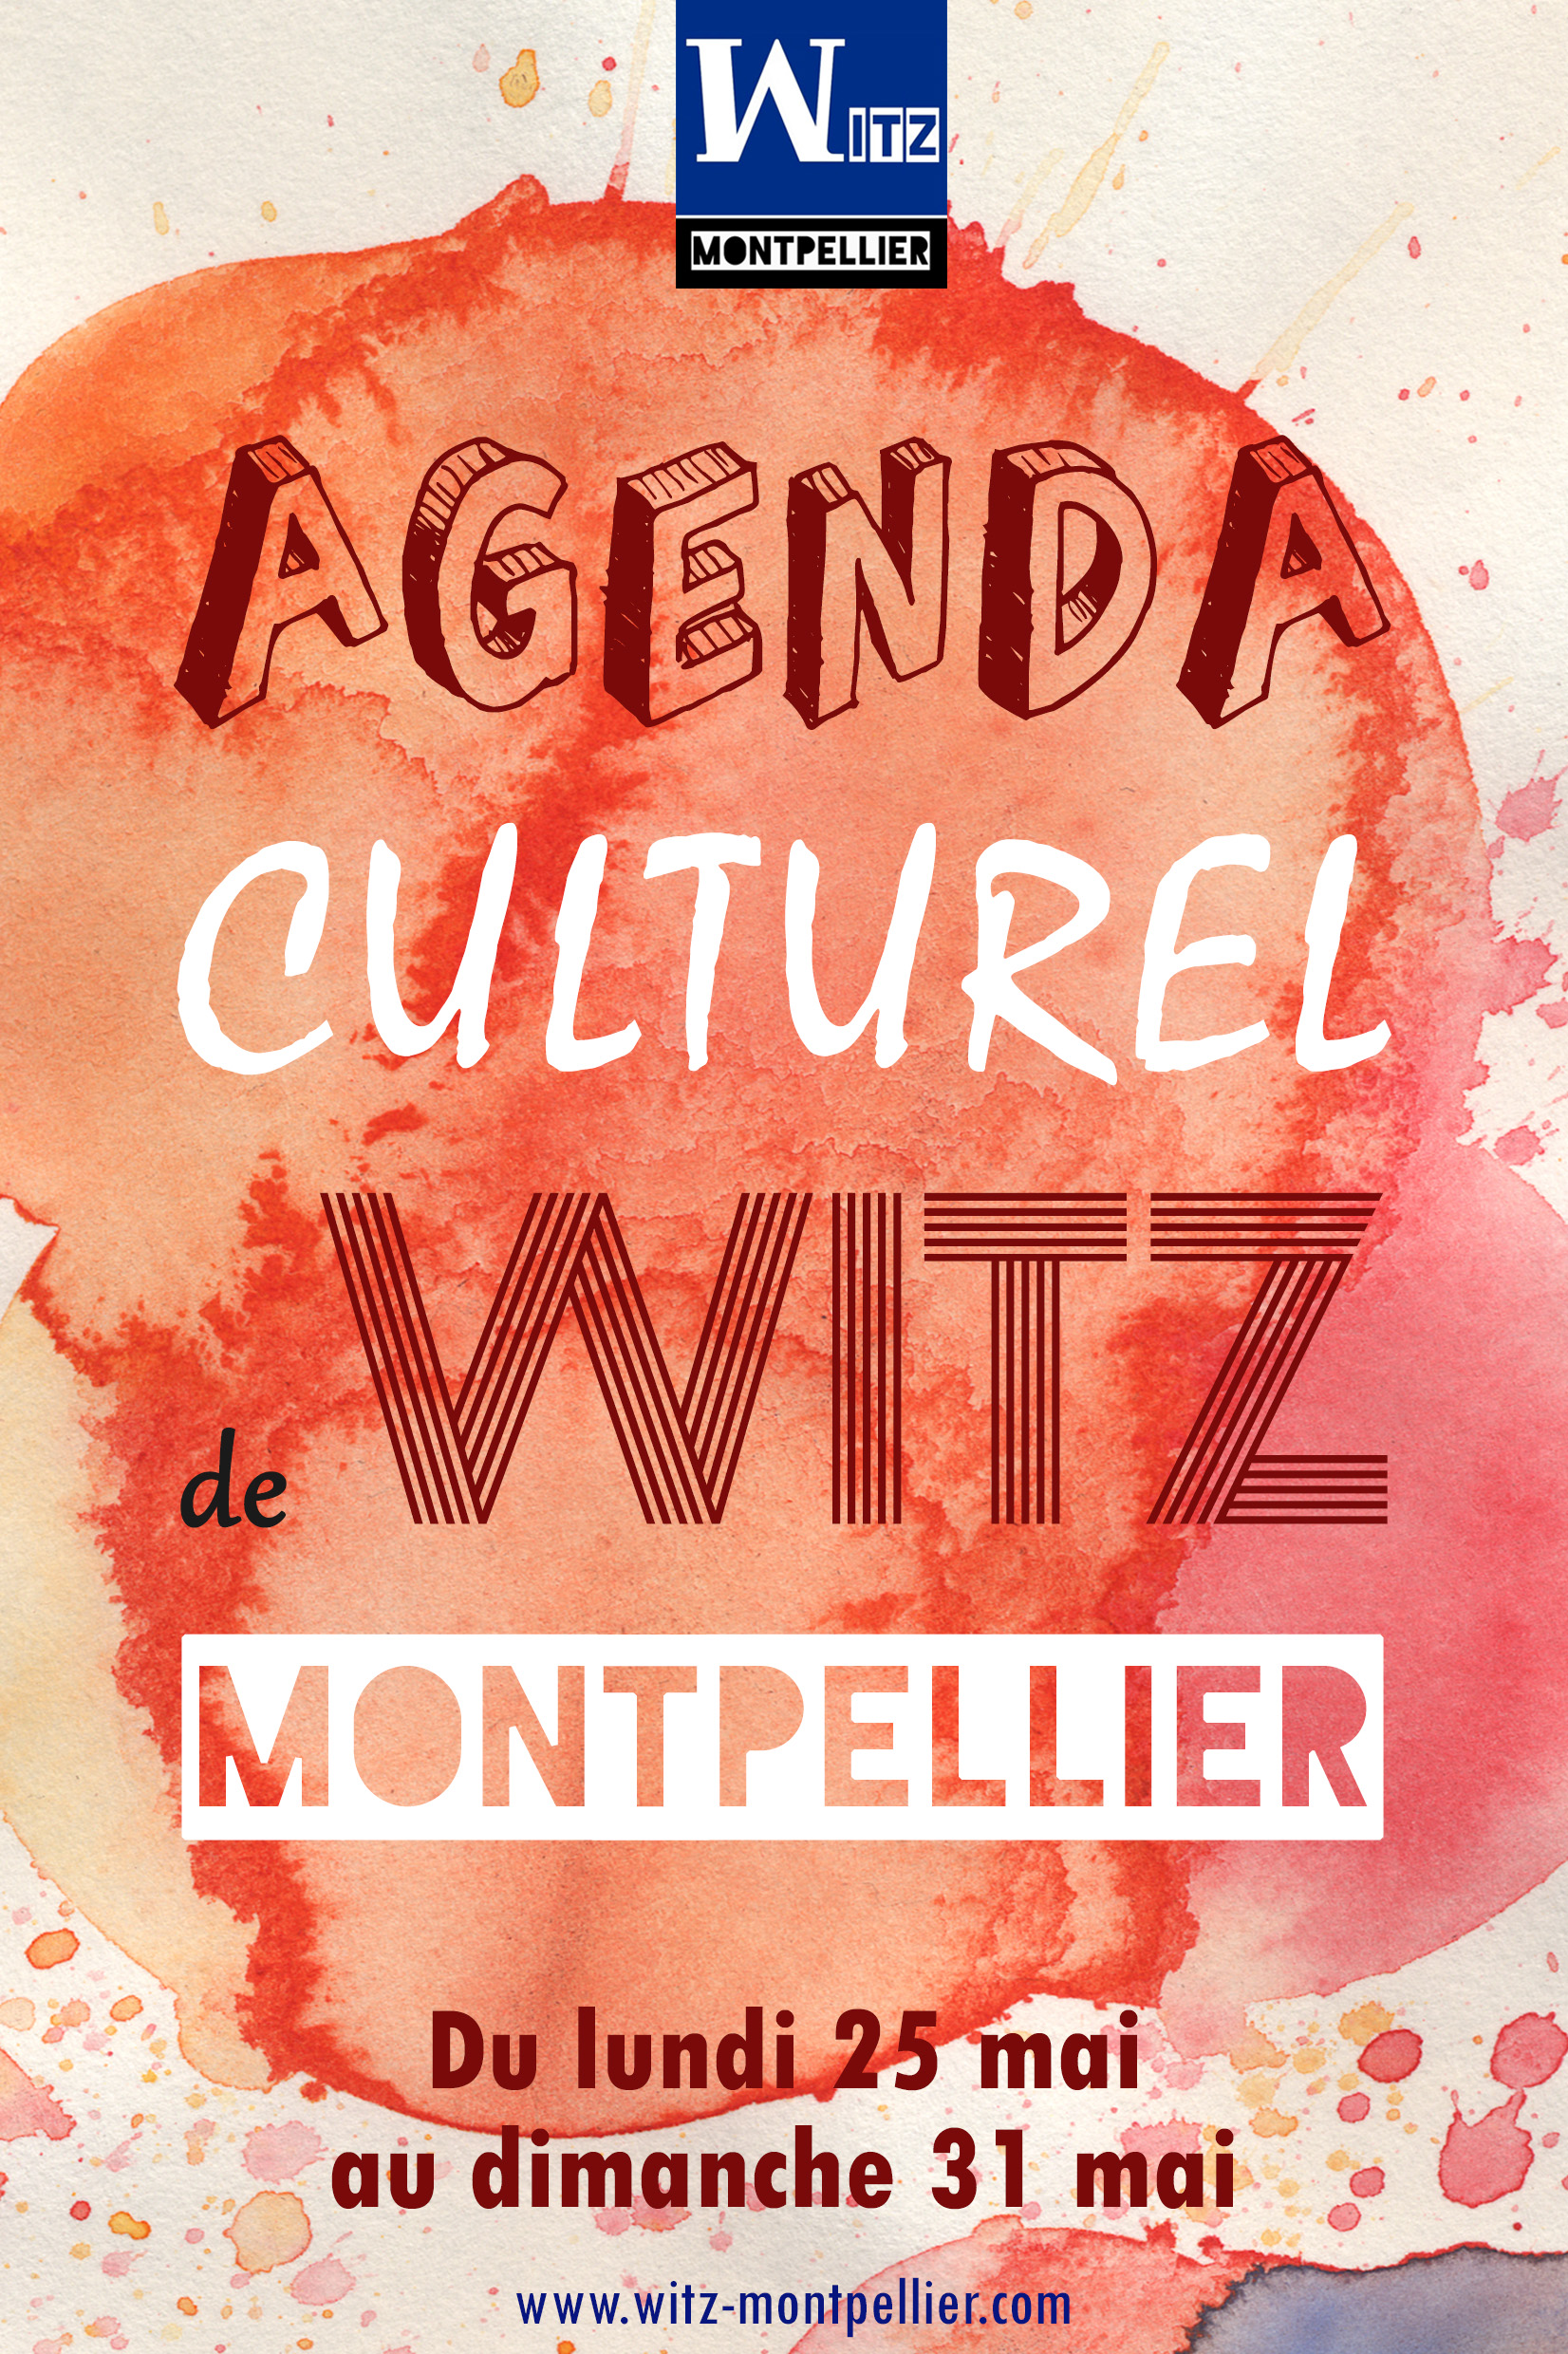 Agenda culturel de Witz Montpellier.jpg